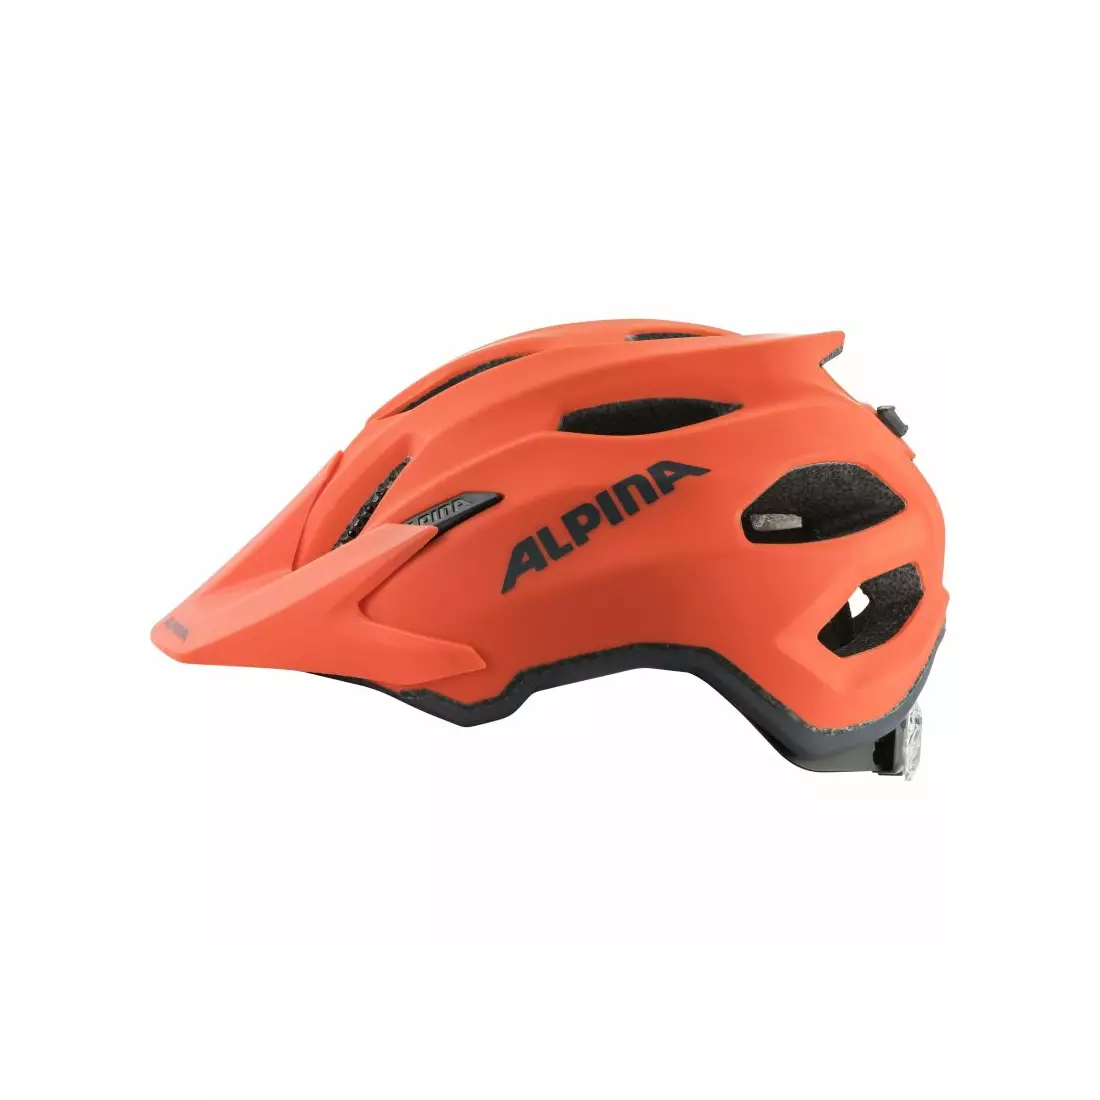 ALPINA junior bicycle helmet CARAPAX JR pumpkin-orange mat